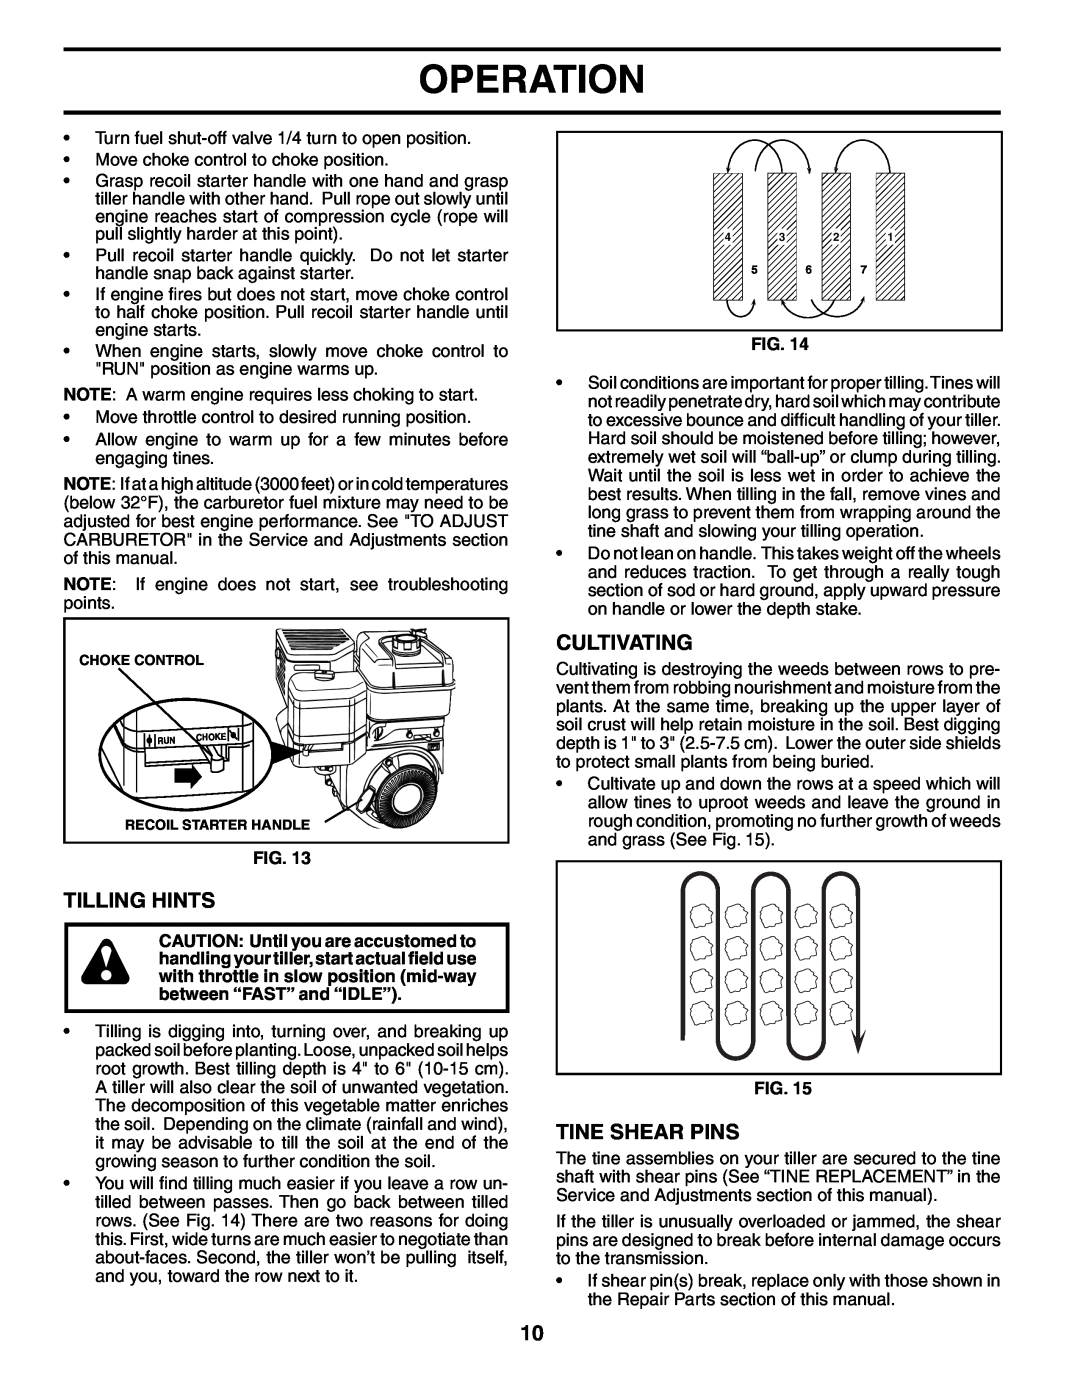 Husqvarna 650RTT owner manual Tilling Hints, Cultivating, Tine Shear Pins, Operation 